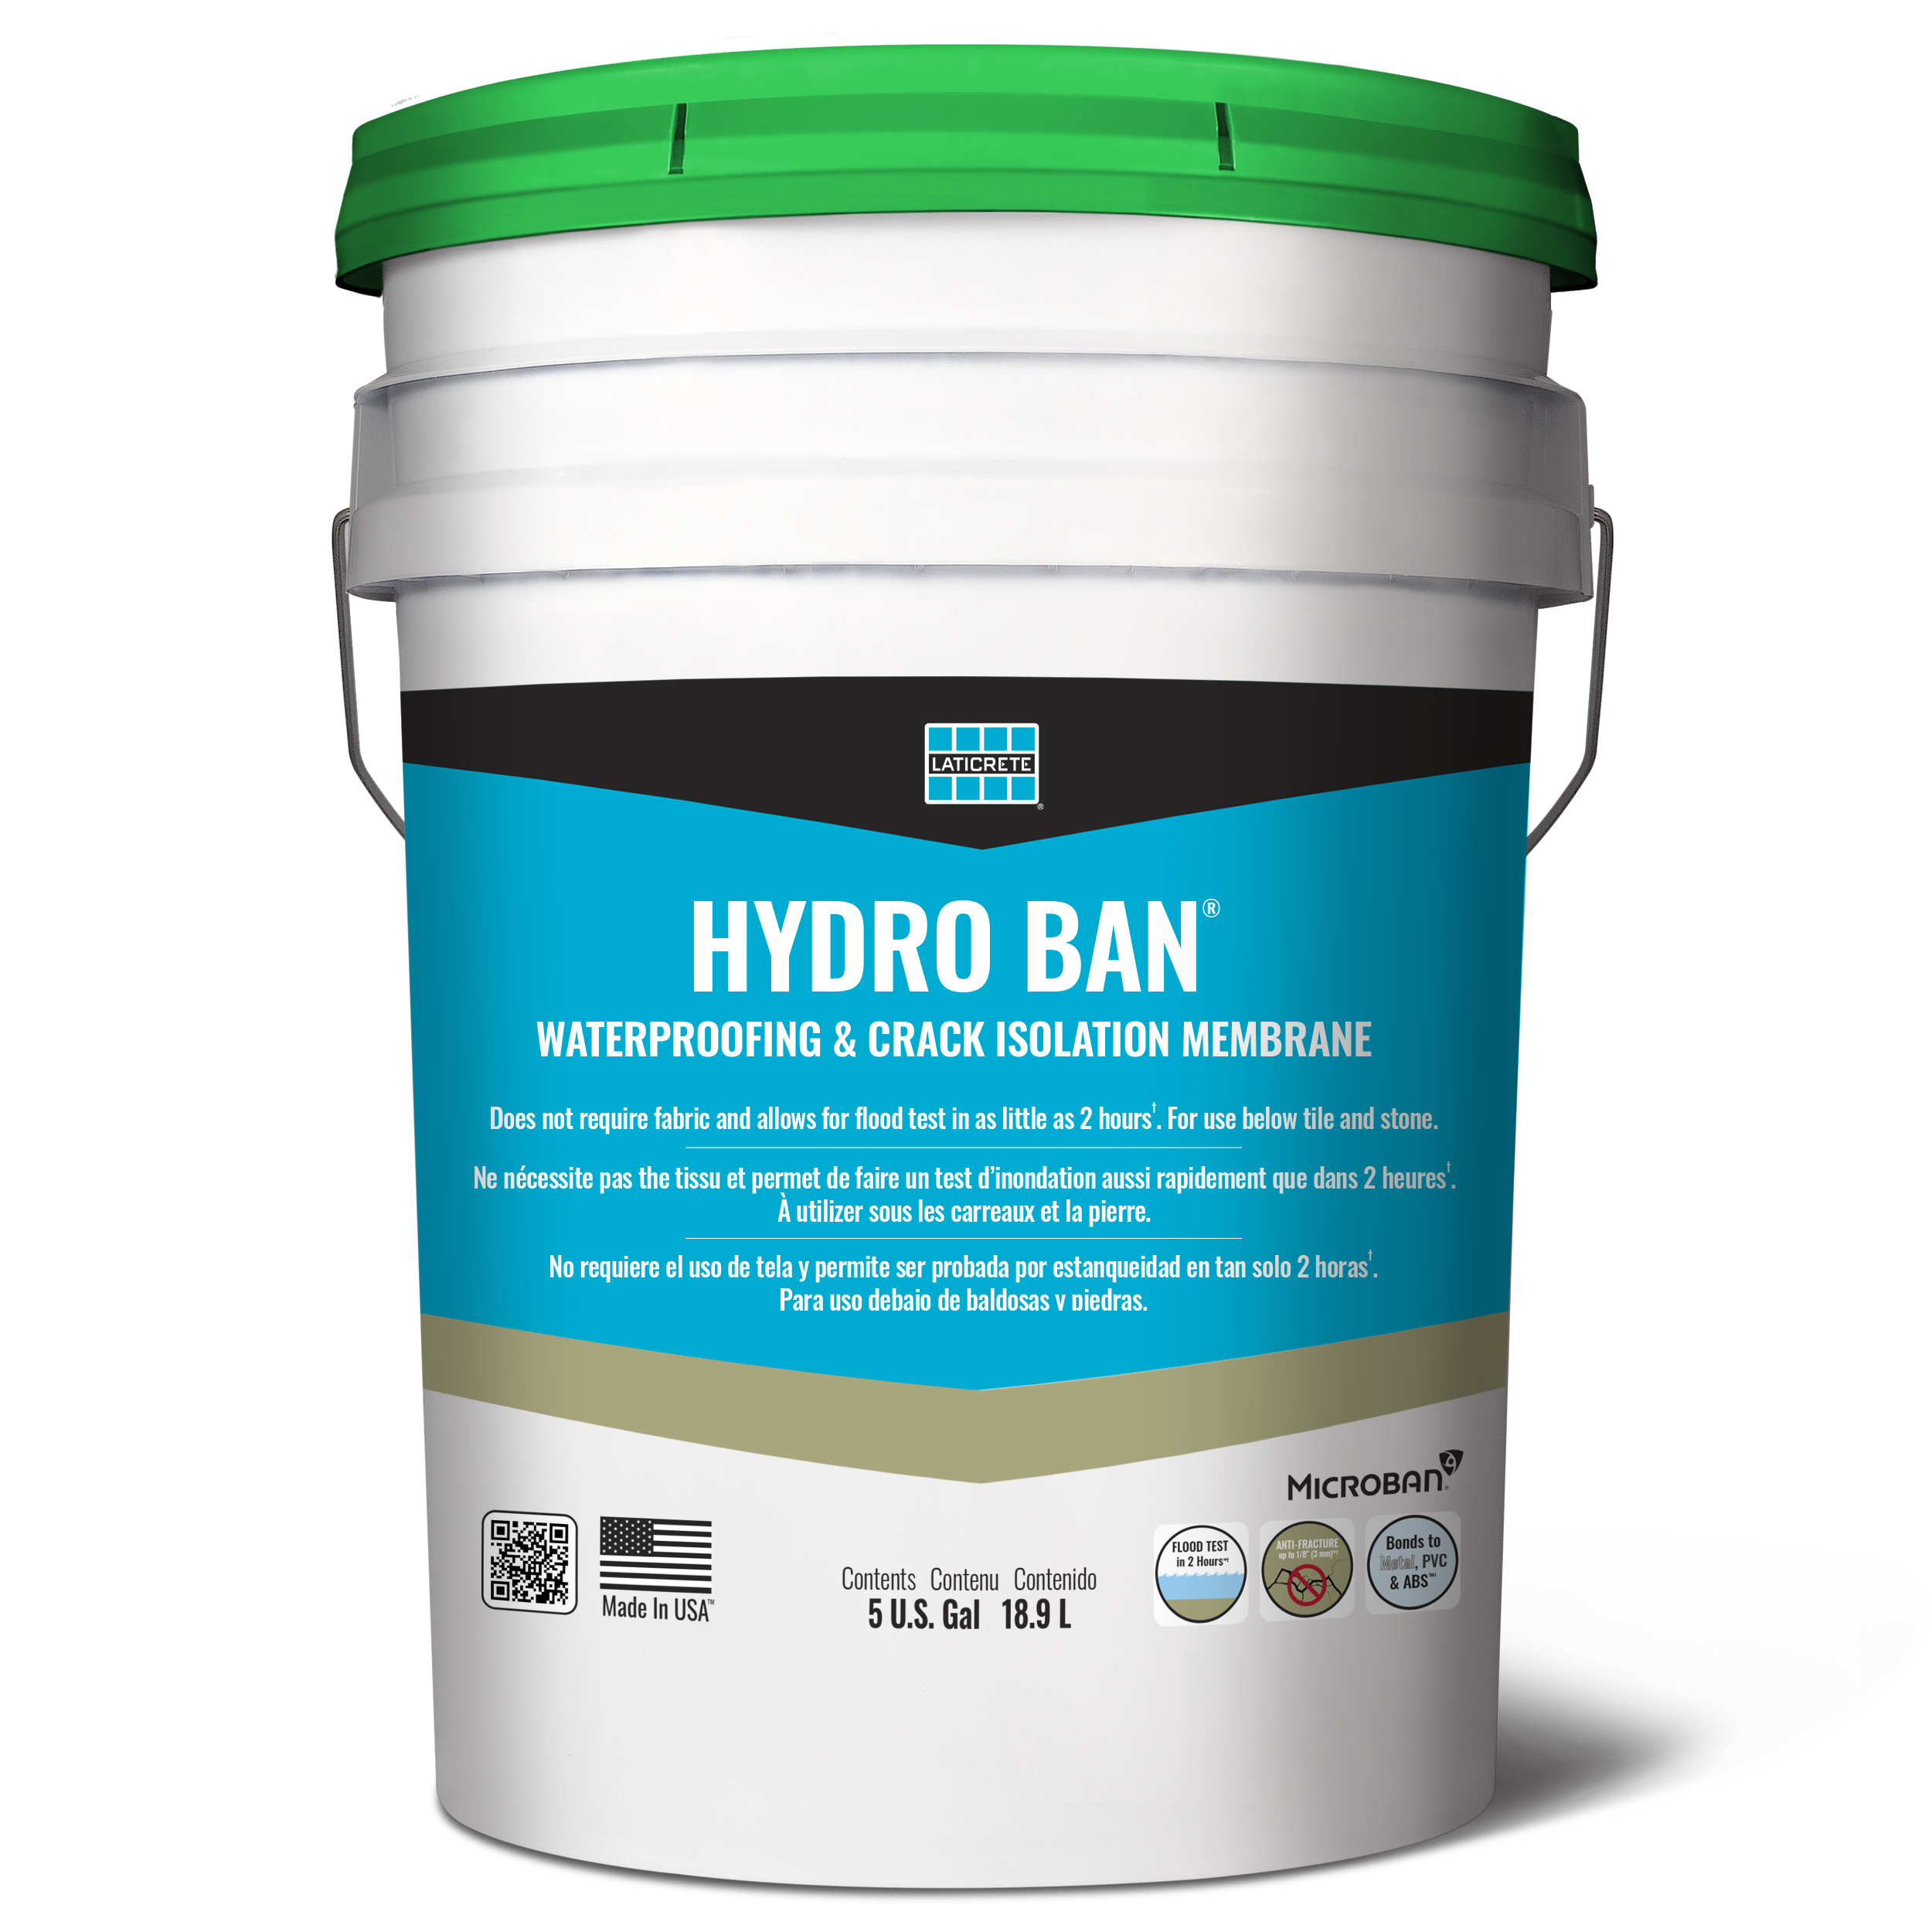 HYDRO BAN - Waterproofing & Crack Isolation